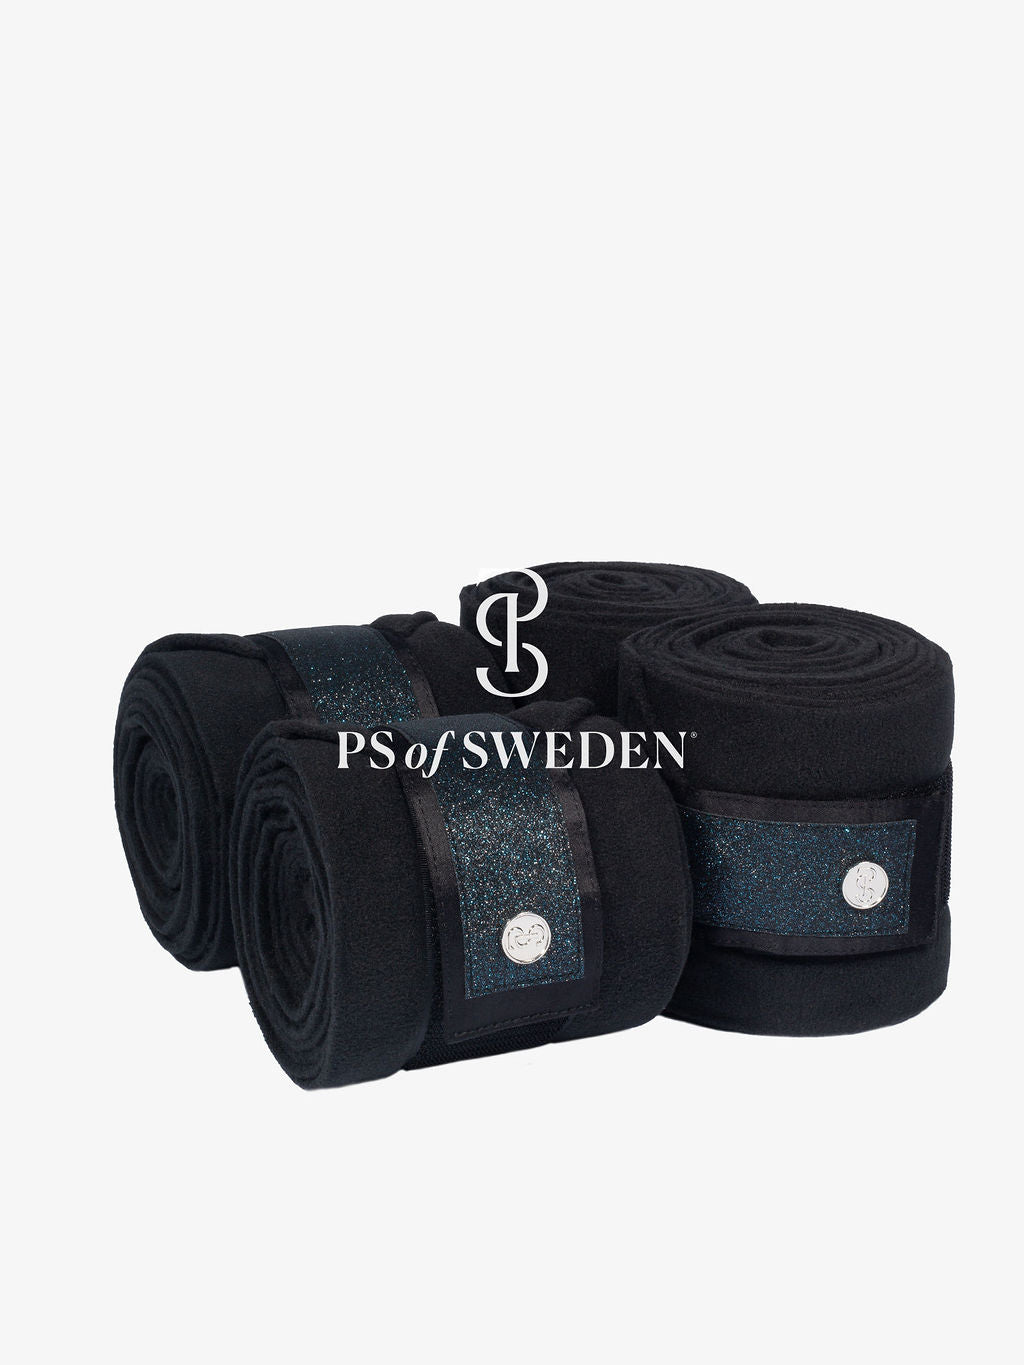 PS of Sweden -  Christmas Stardust - Teal Glitter Saddlepad, Polos & Fly Veil Bundle